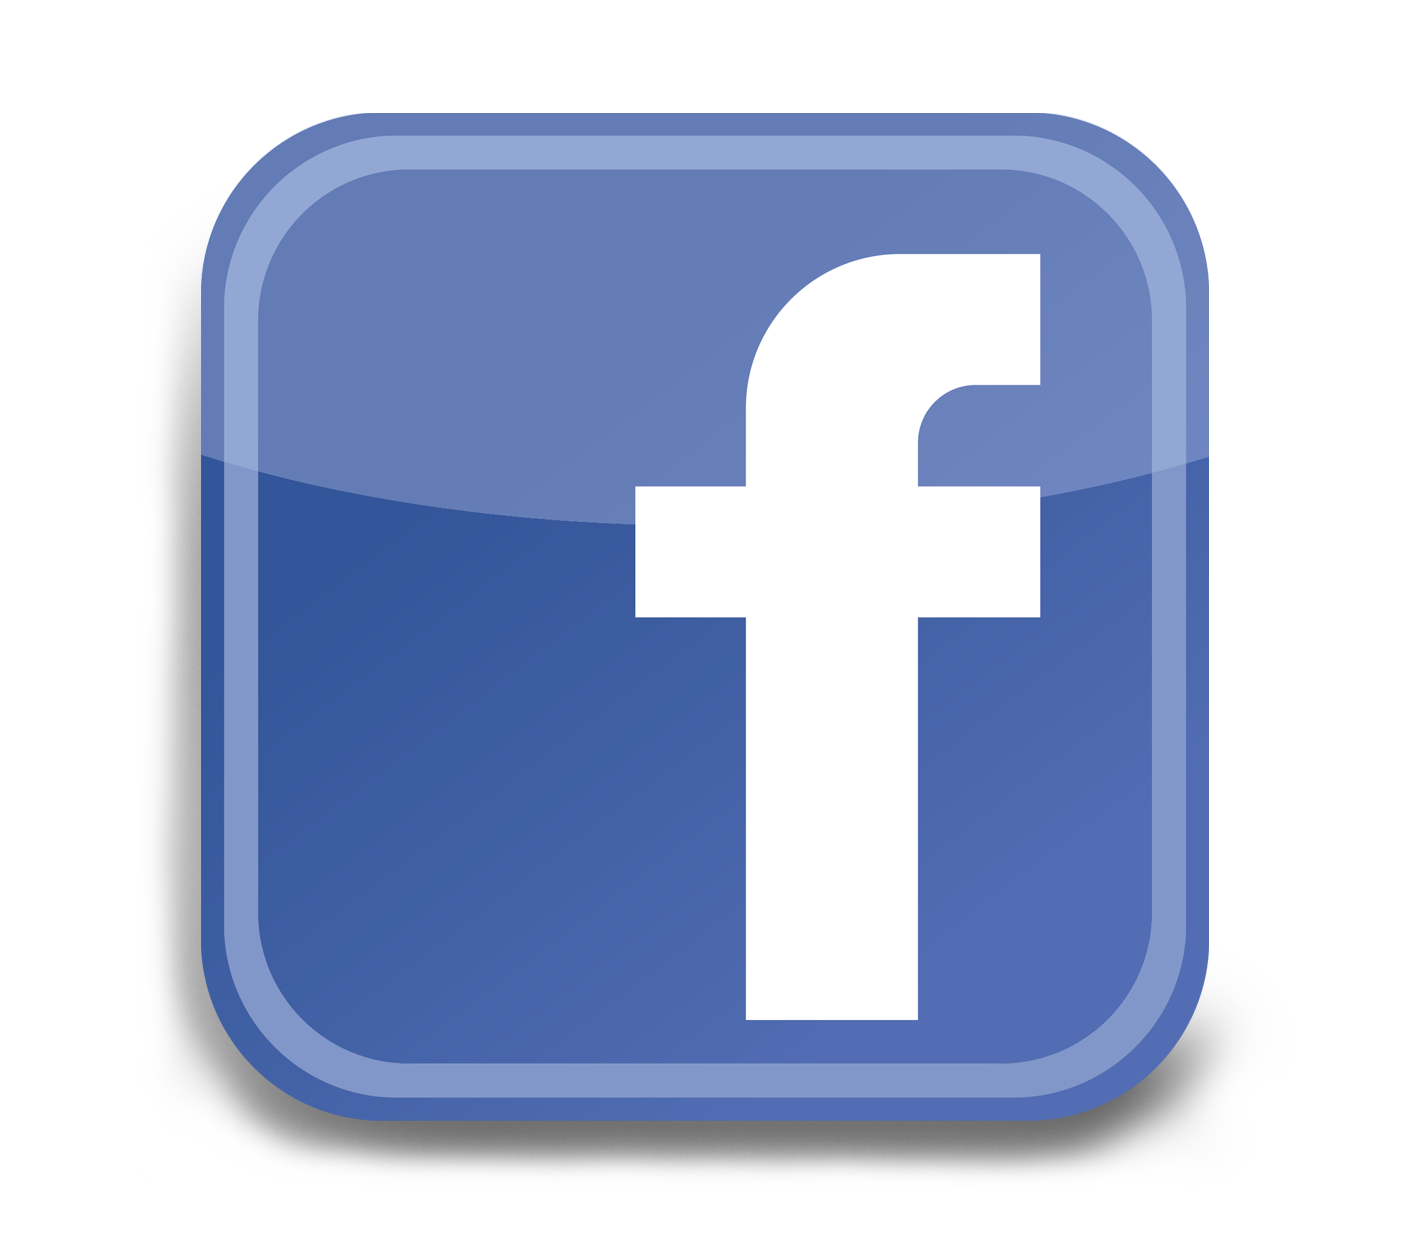 Logo di Facebook